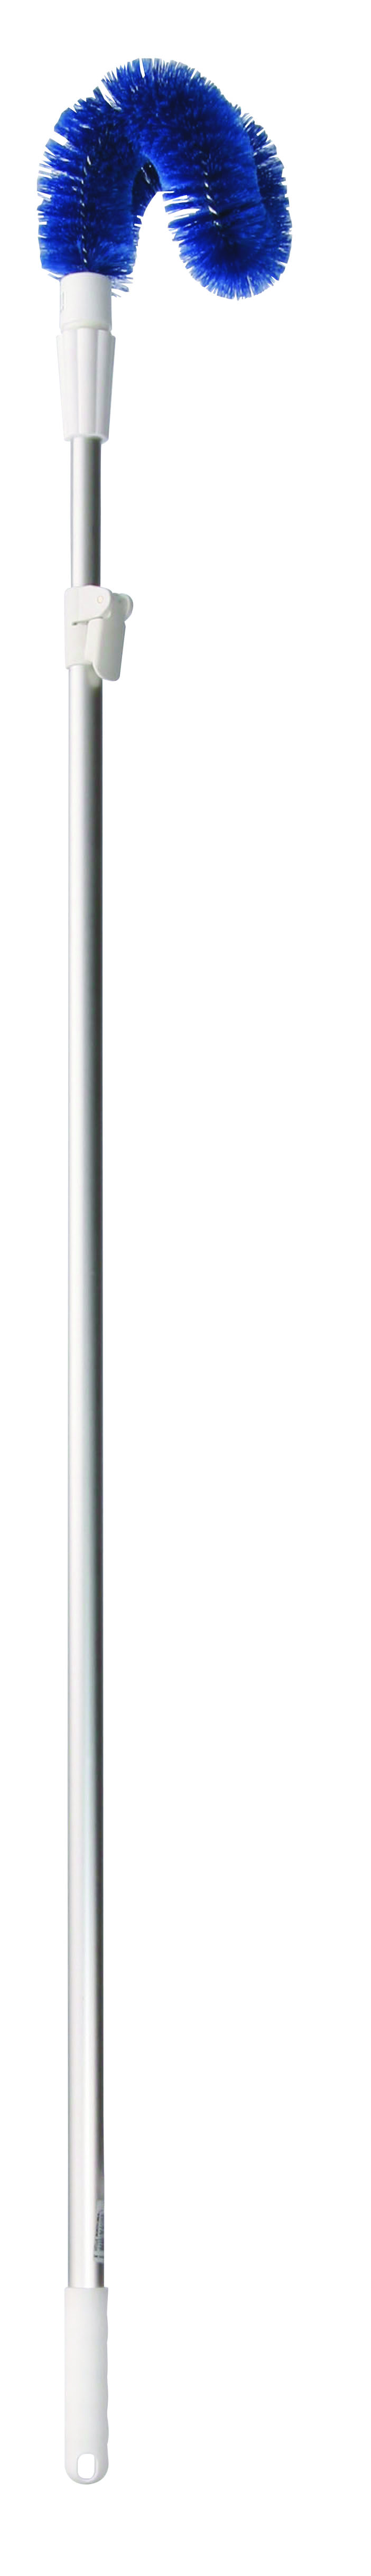 Щетка HAUG BÜRSTEN для мойки внешней поверхности труб, мягкая, синий цвет,  Ø65 мм